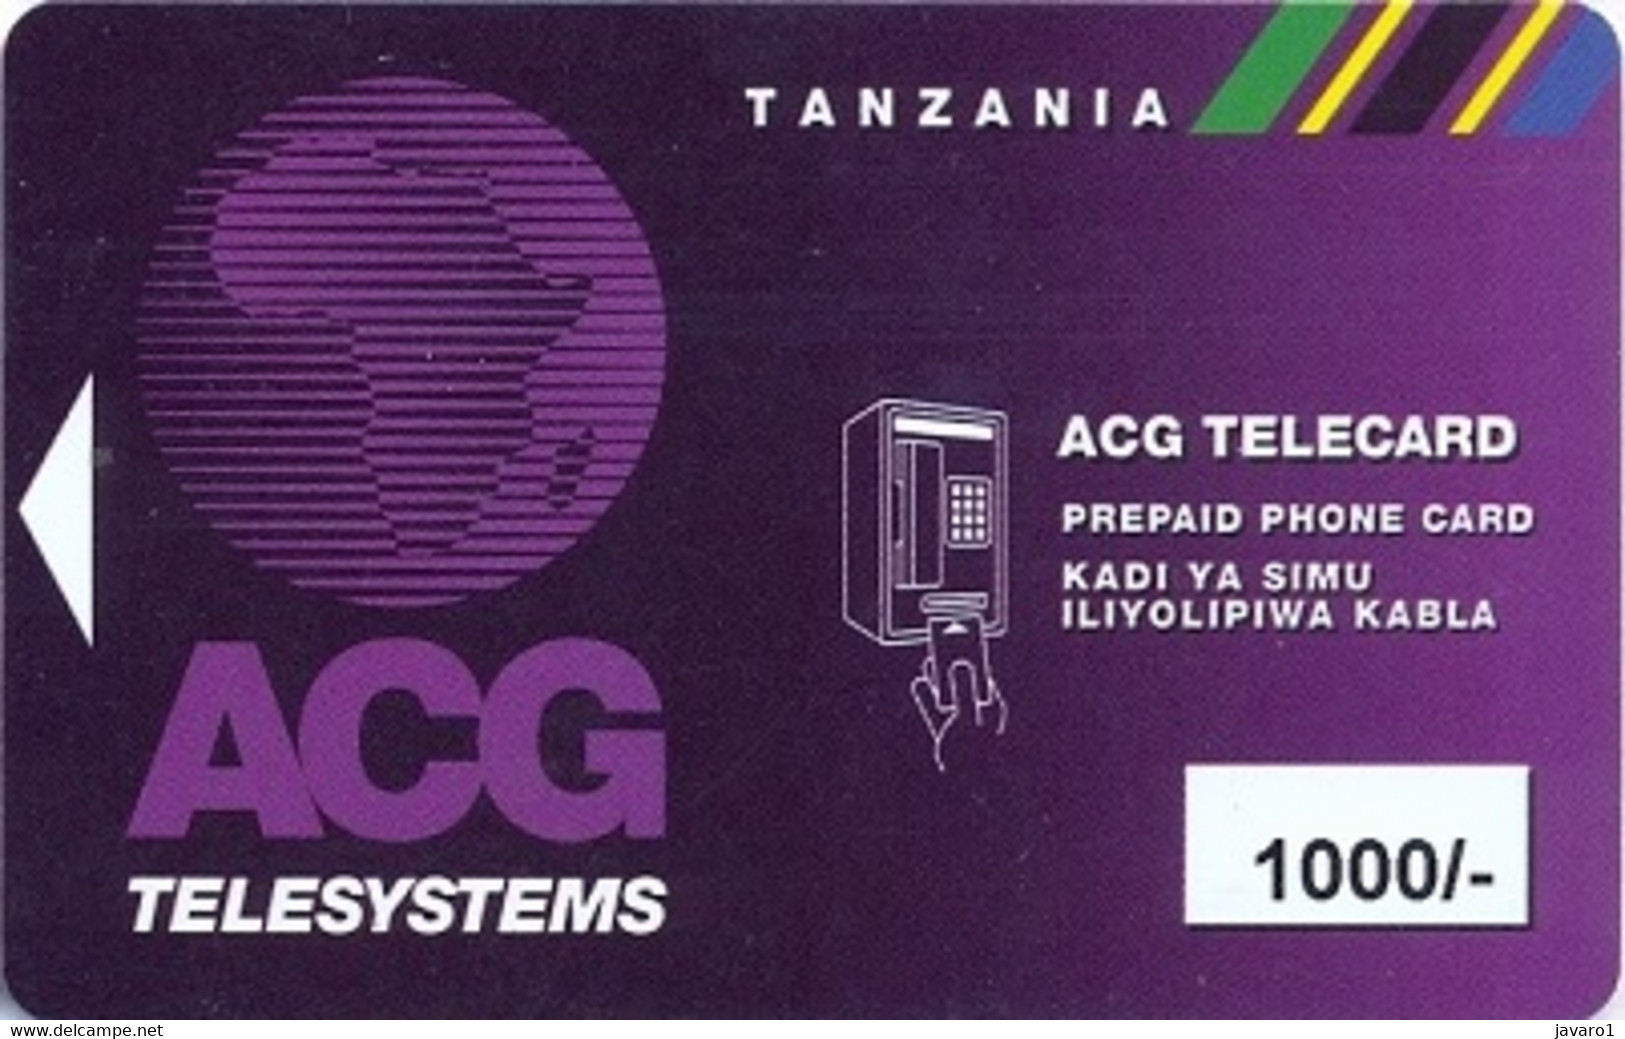 TANZANIA : AM03 AGC Tel:Cardphone 1000/- (126) Rev.2 USED As Pictured - Tanzanie